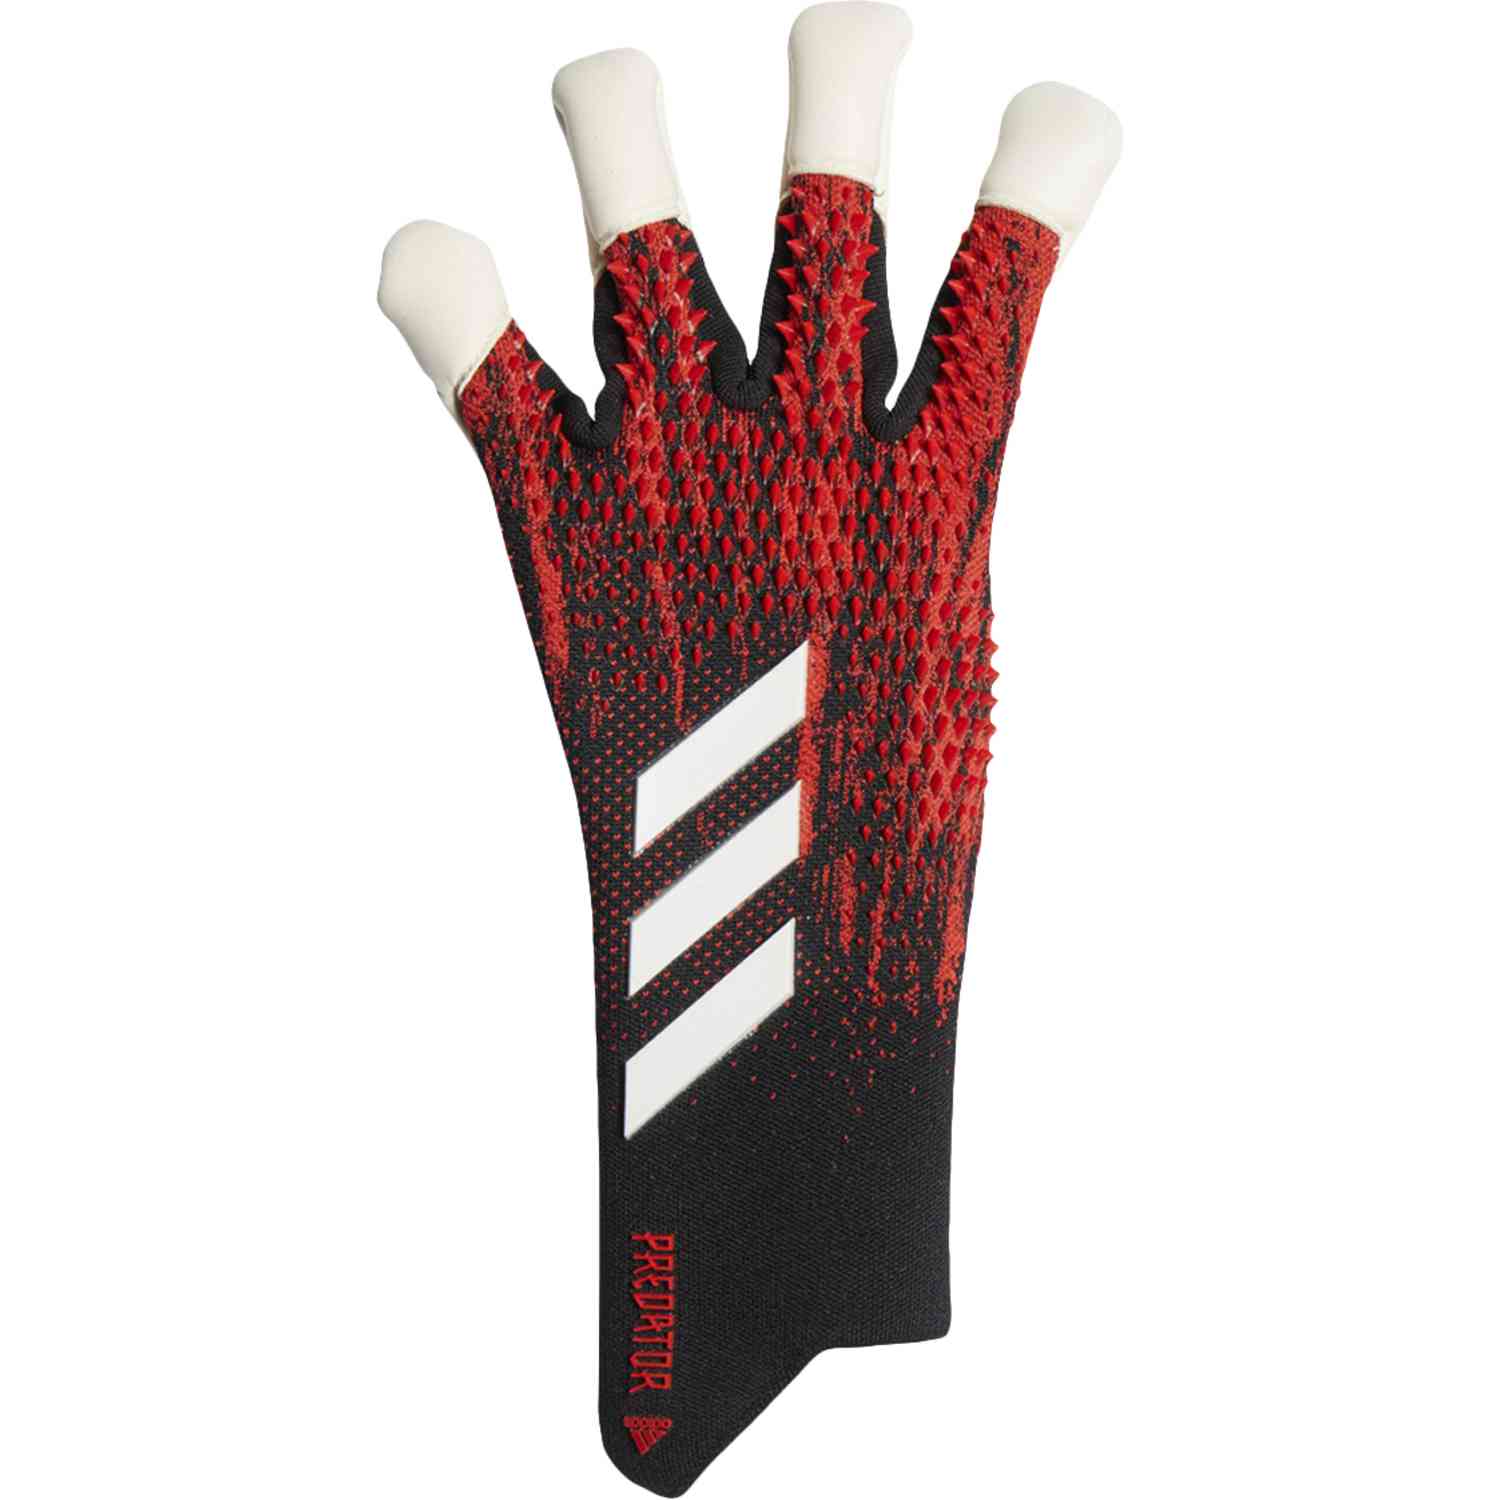 Адидас предатор перчатки. Adidas Predator Mutator перчатки. Adidas Predator Pro Hybrid перчатки. Adidas Predator Pro goalkeeper Gloves Pro Hybrid. Adidas Predator Pro Gloves URG 2.0.